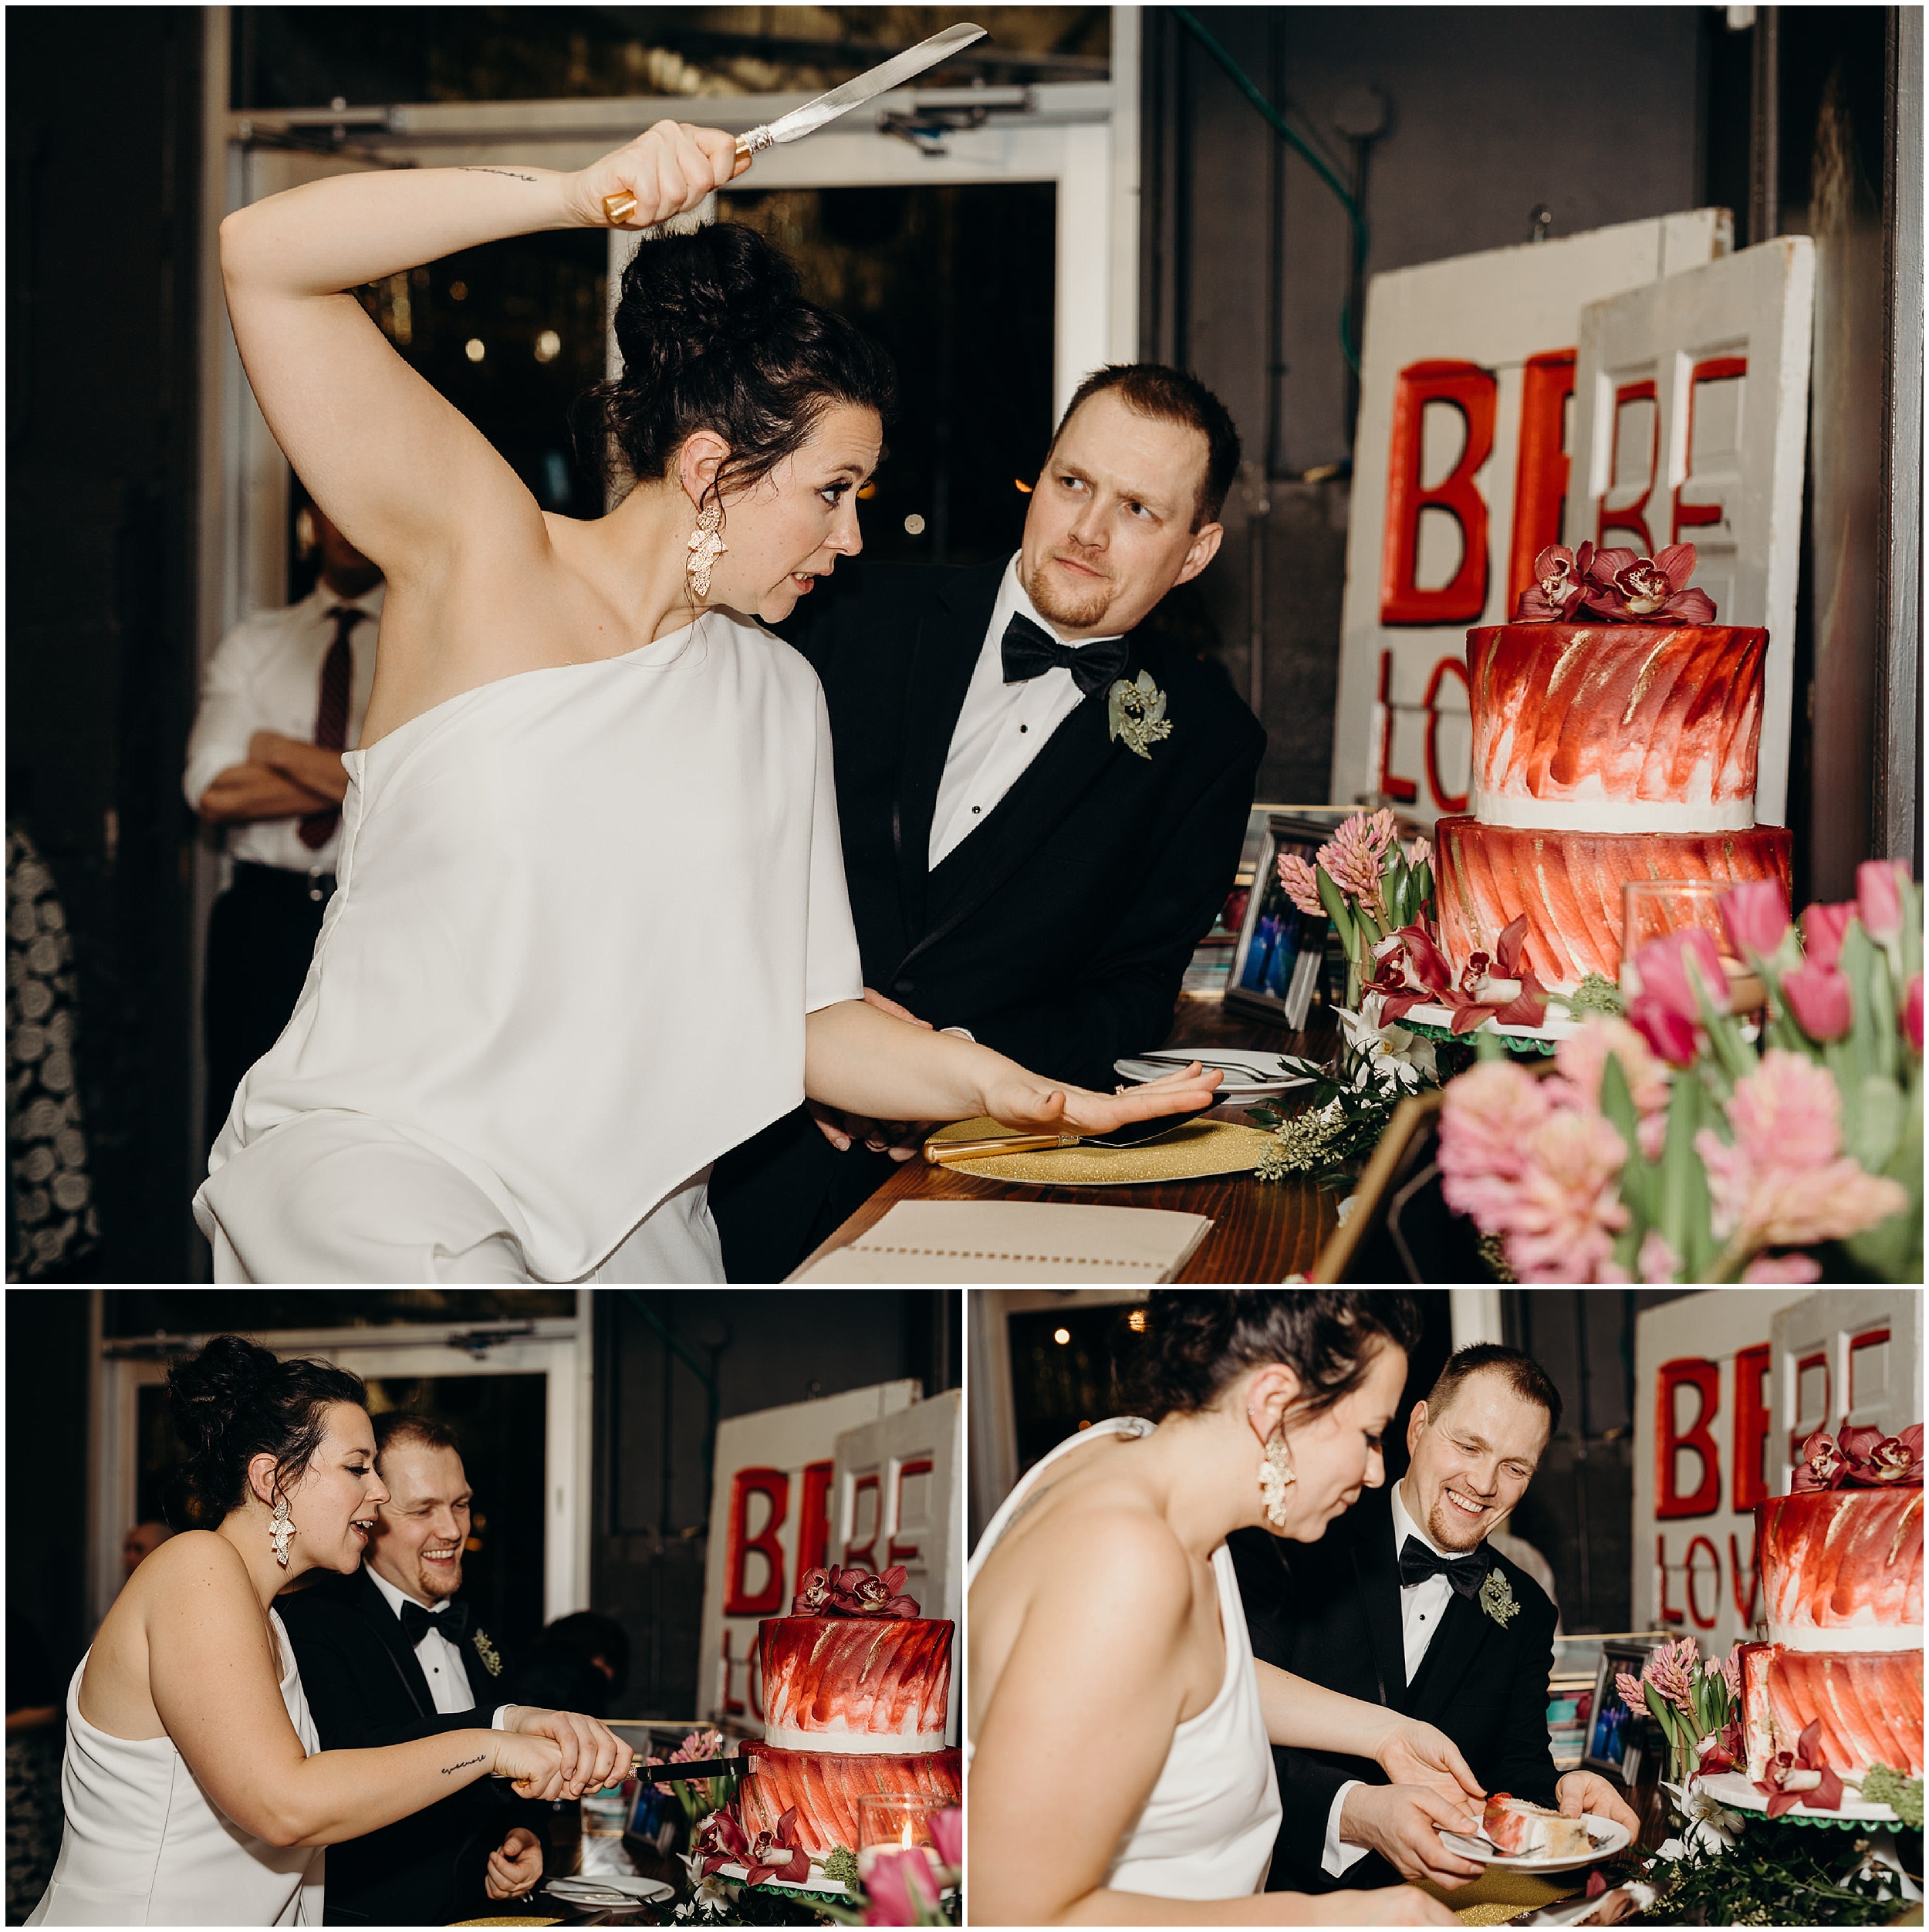 bride and groom cut their wedding cake at porta in asbury park, NJ